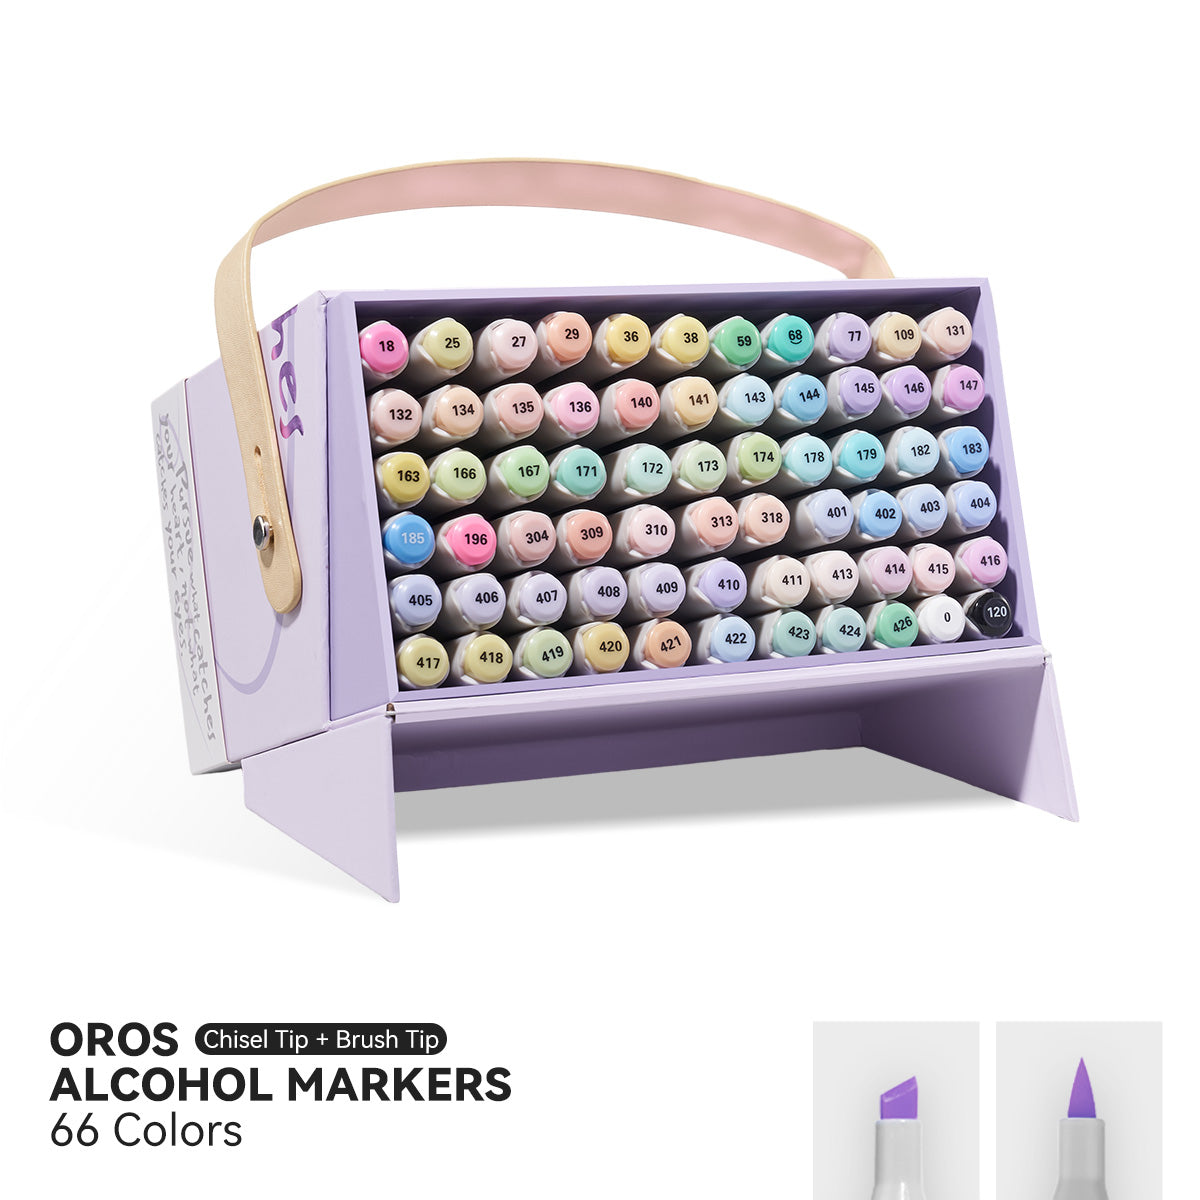 Wholesale Soft Brush Alcohol Based Marker Set For Sketching